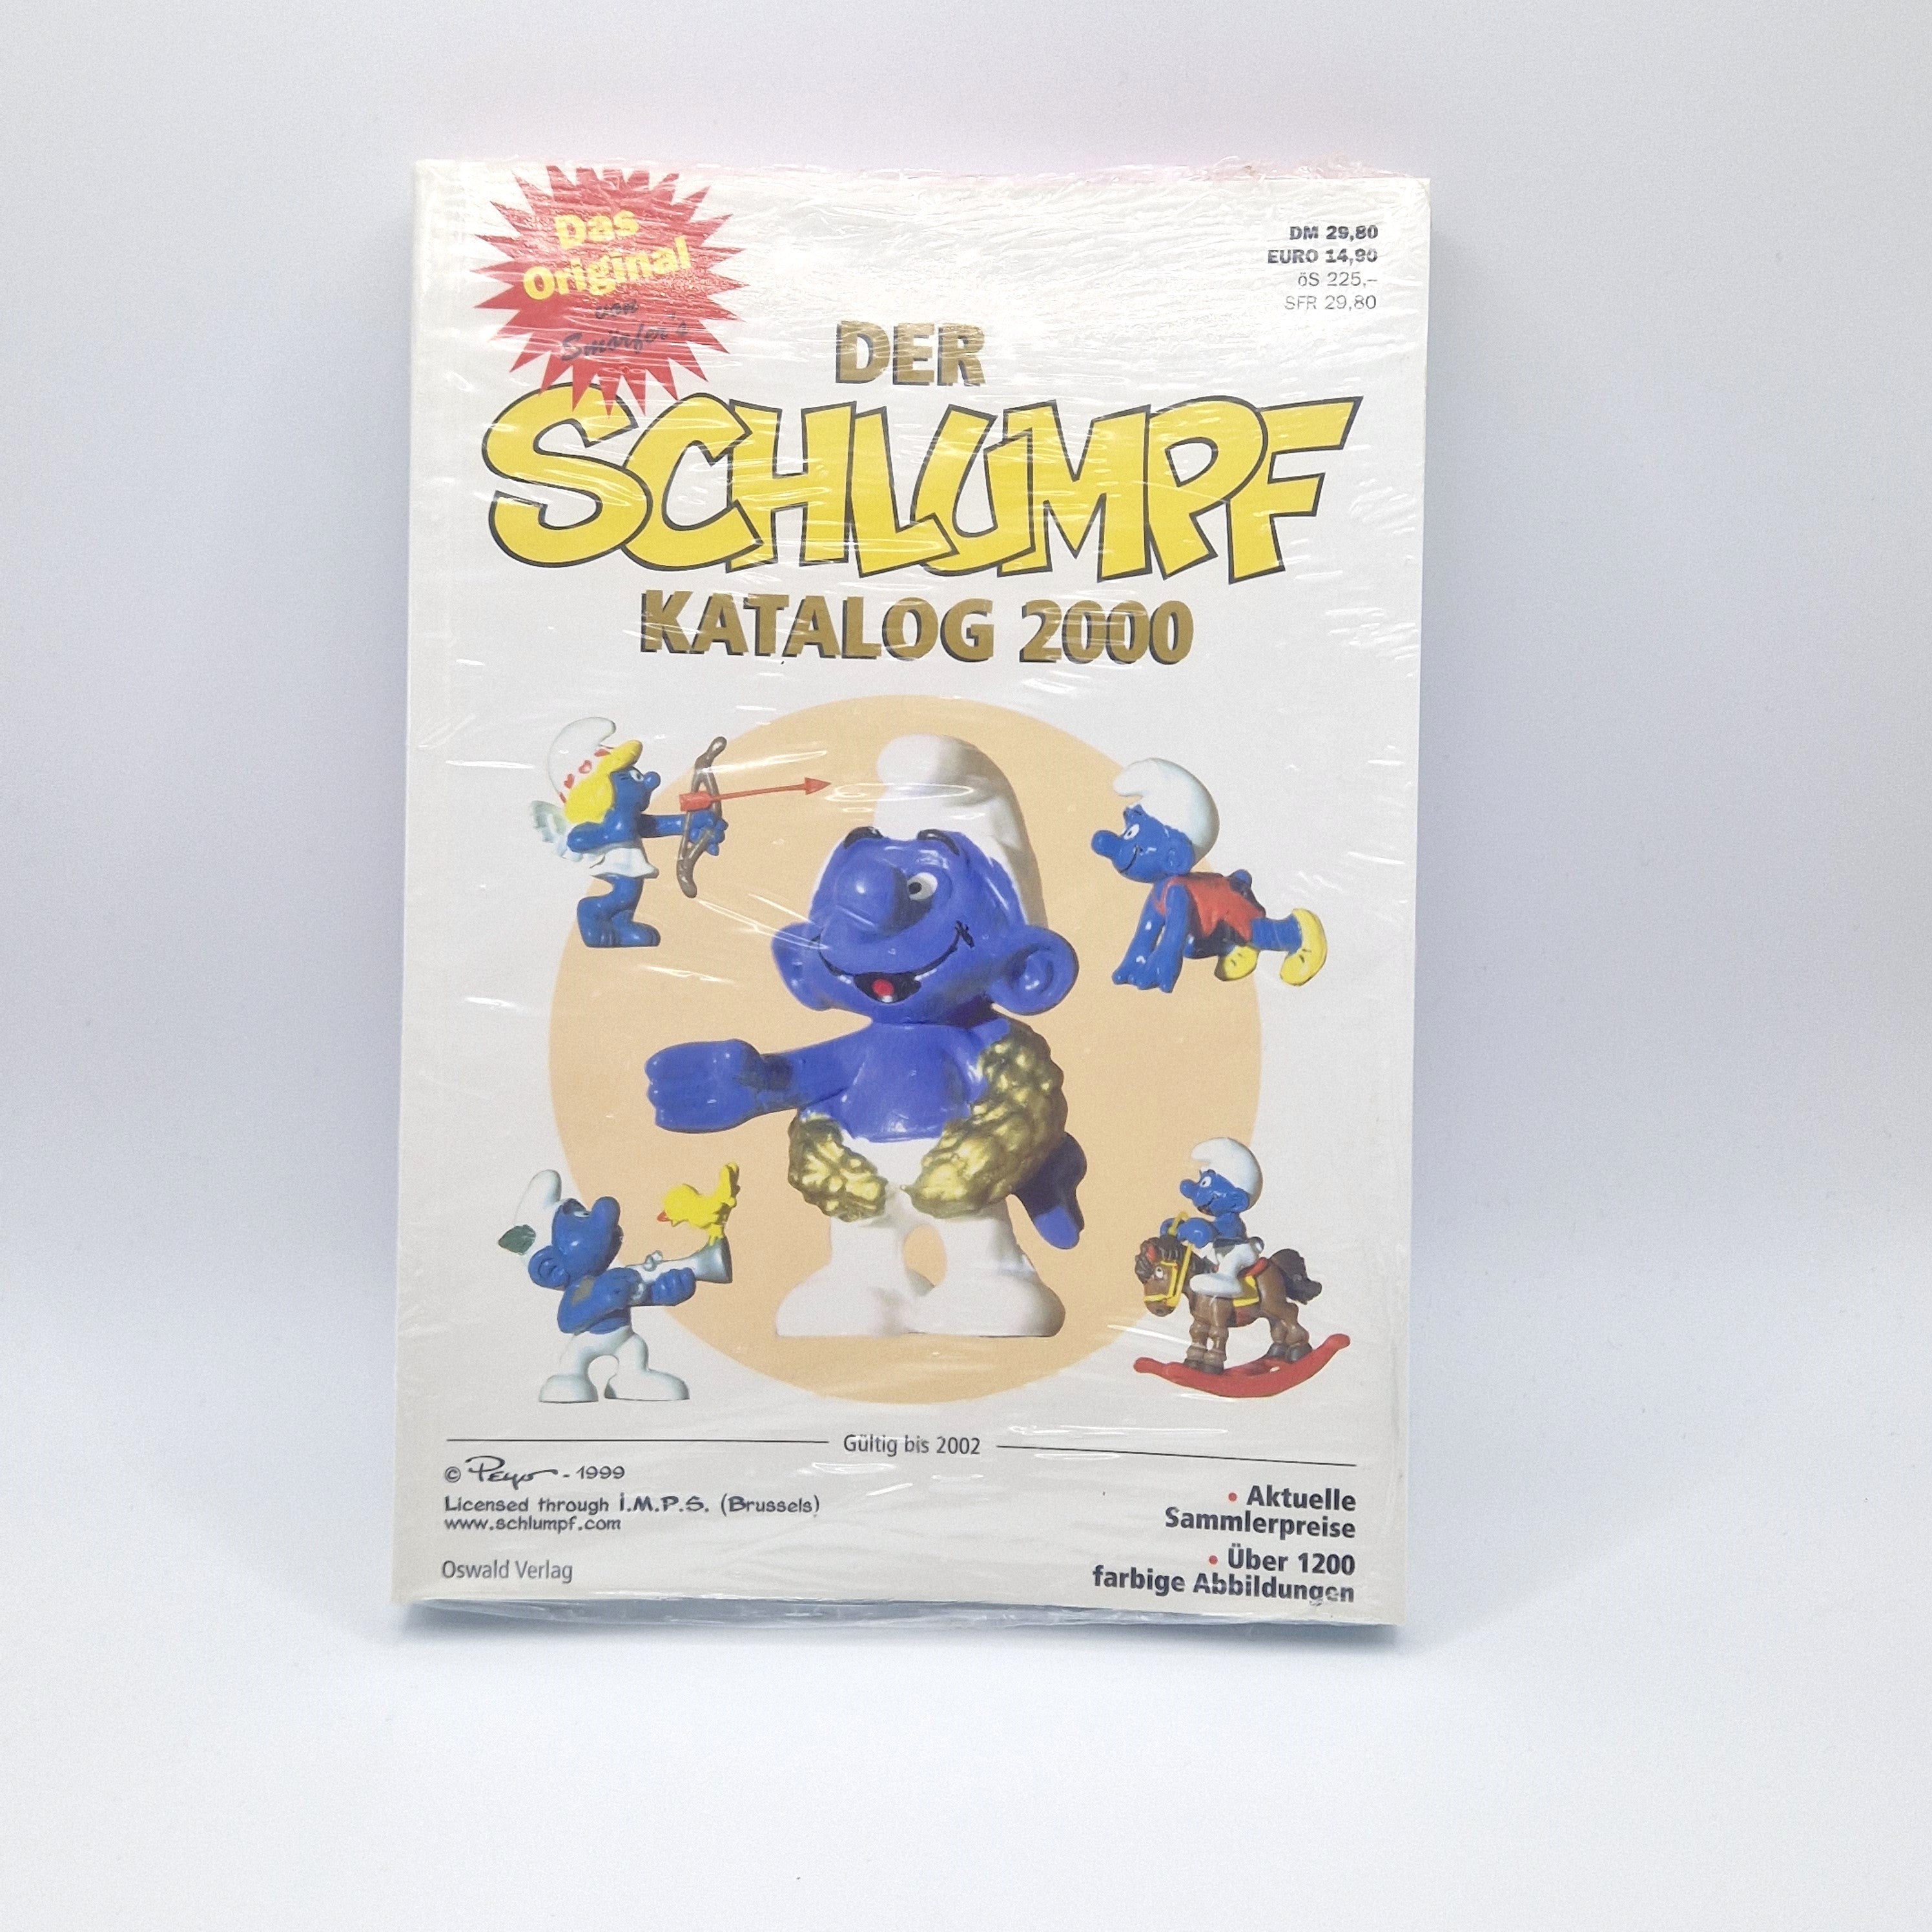 Der Schlumpf Katalog 2000 Peyo  Oswald verlag   